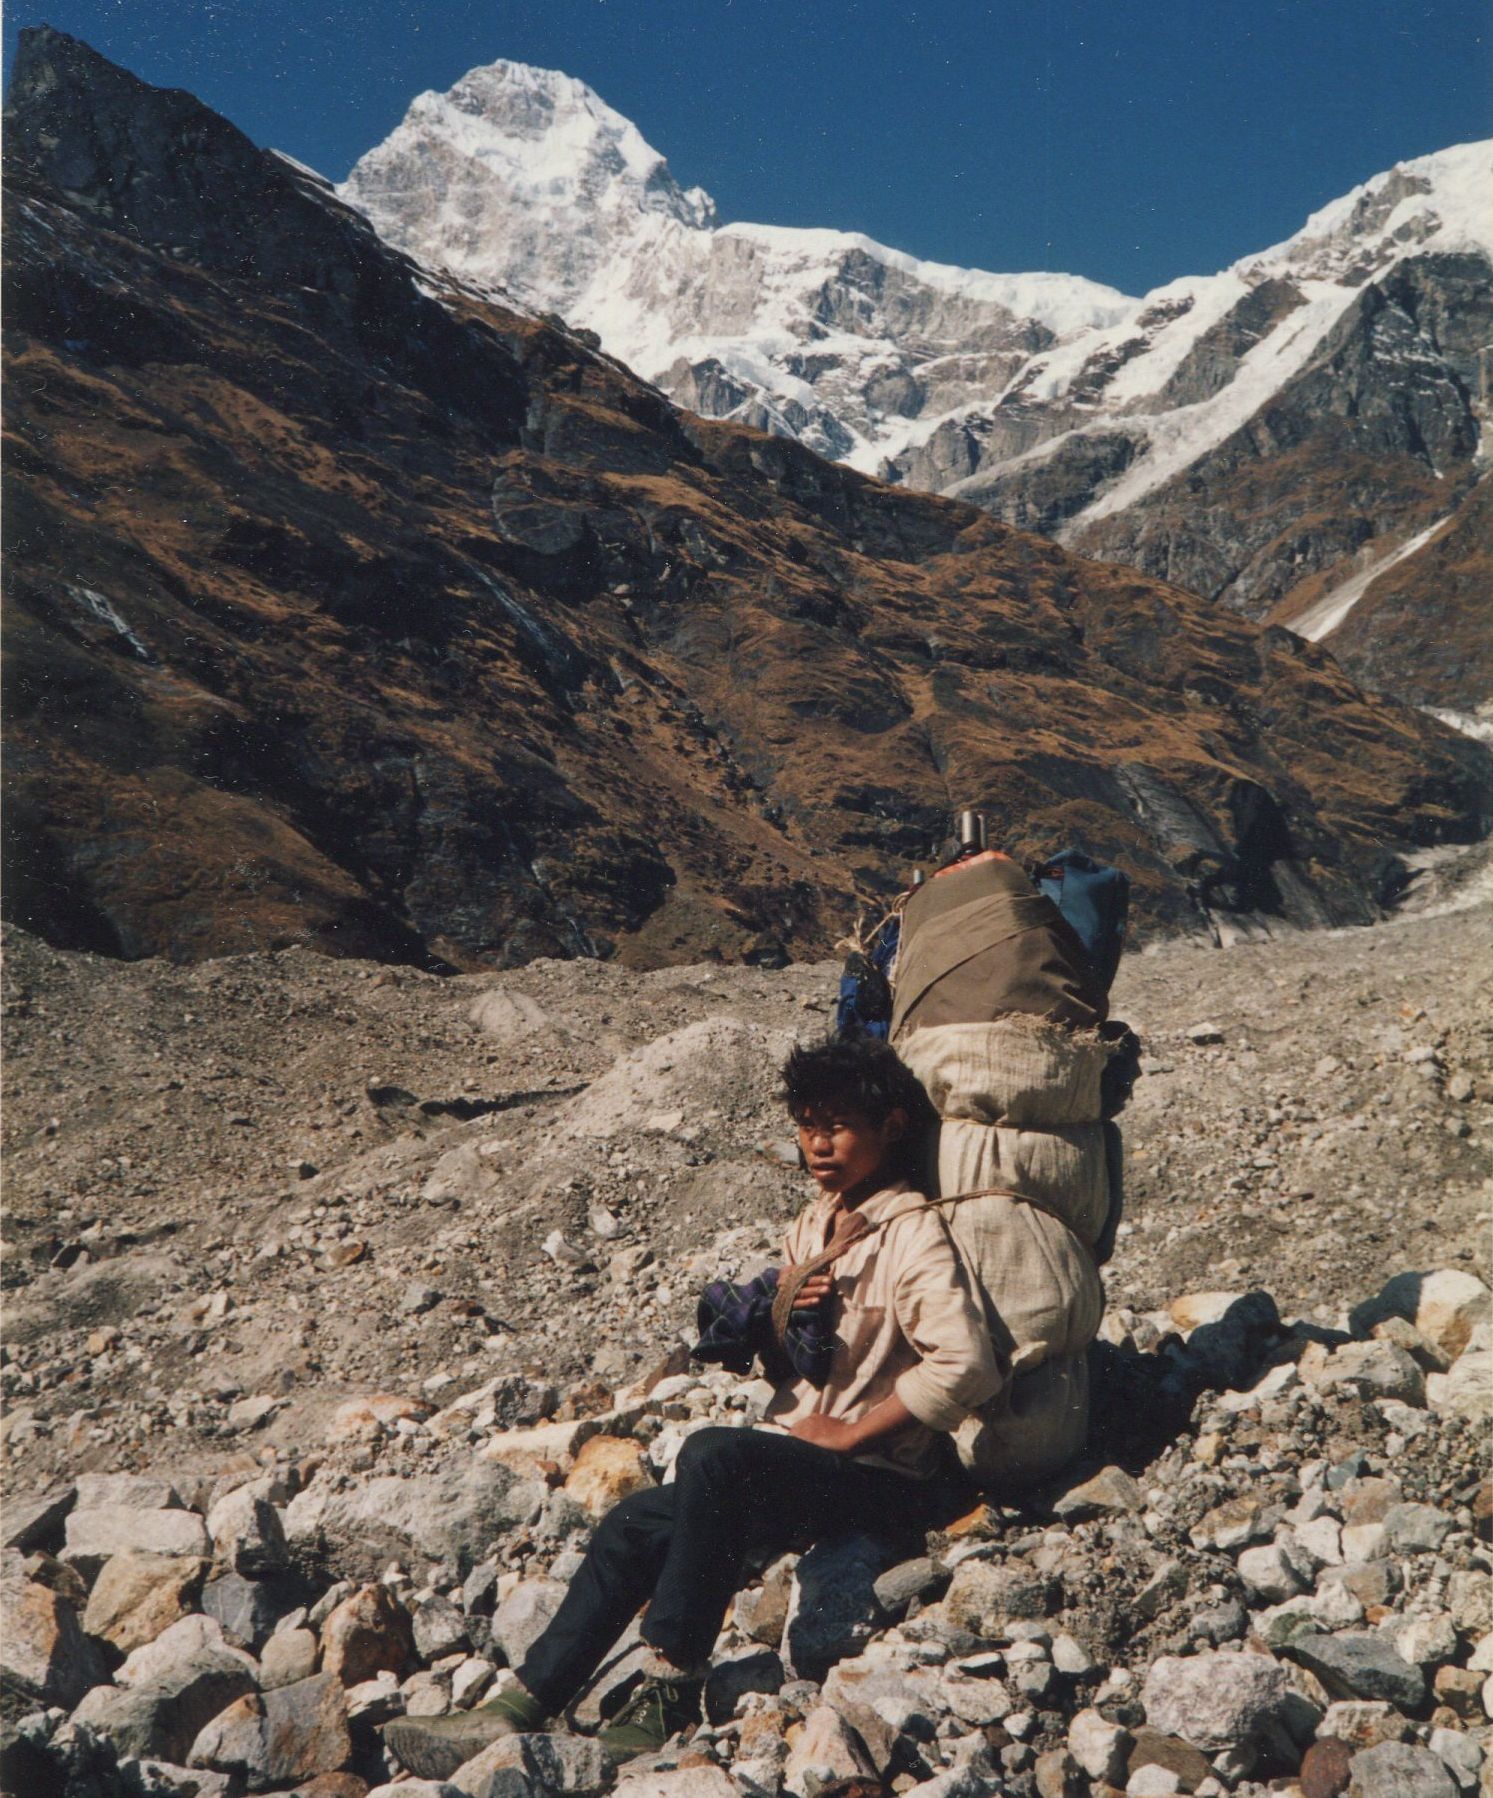 Himalchuli from Chuling Glacier